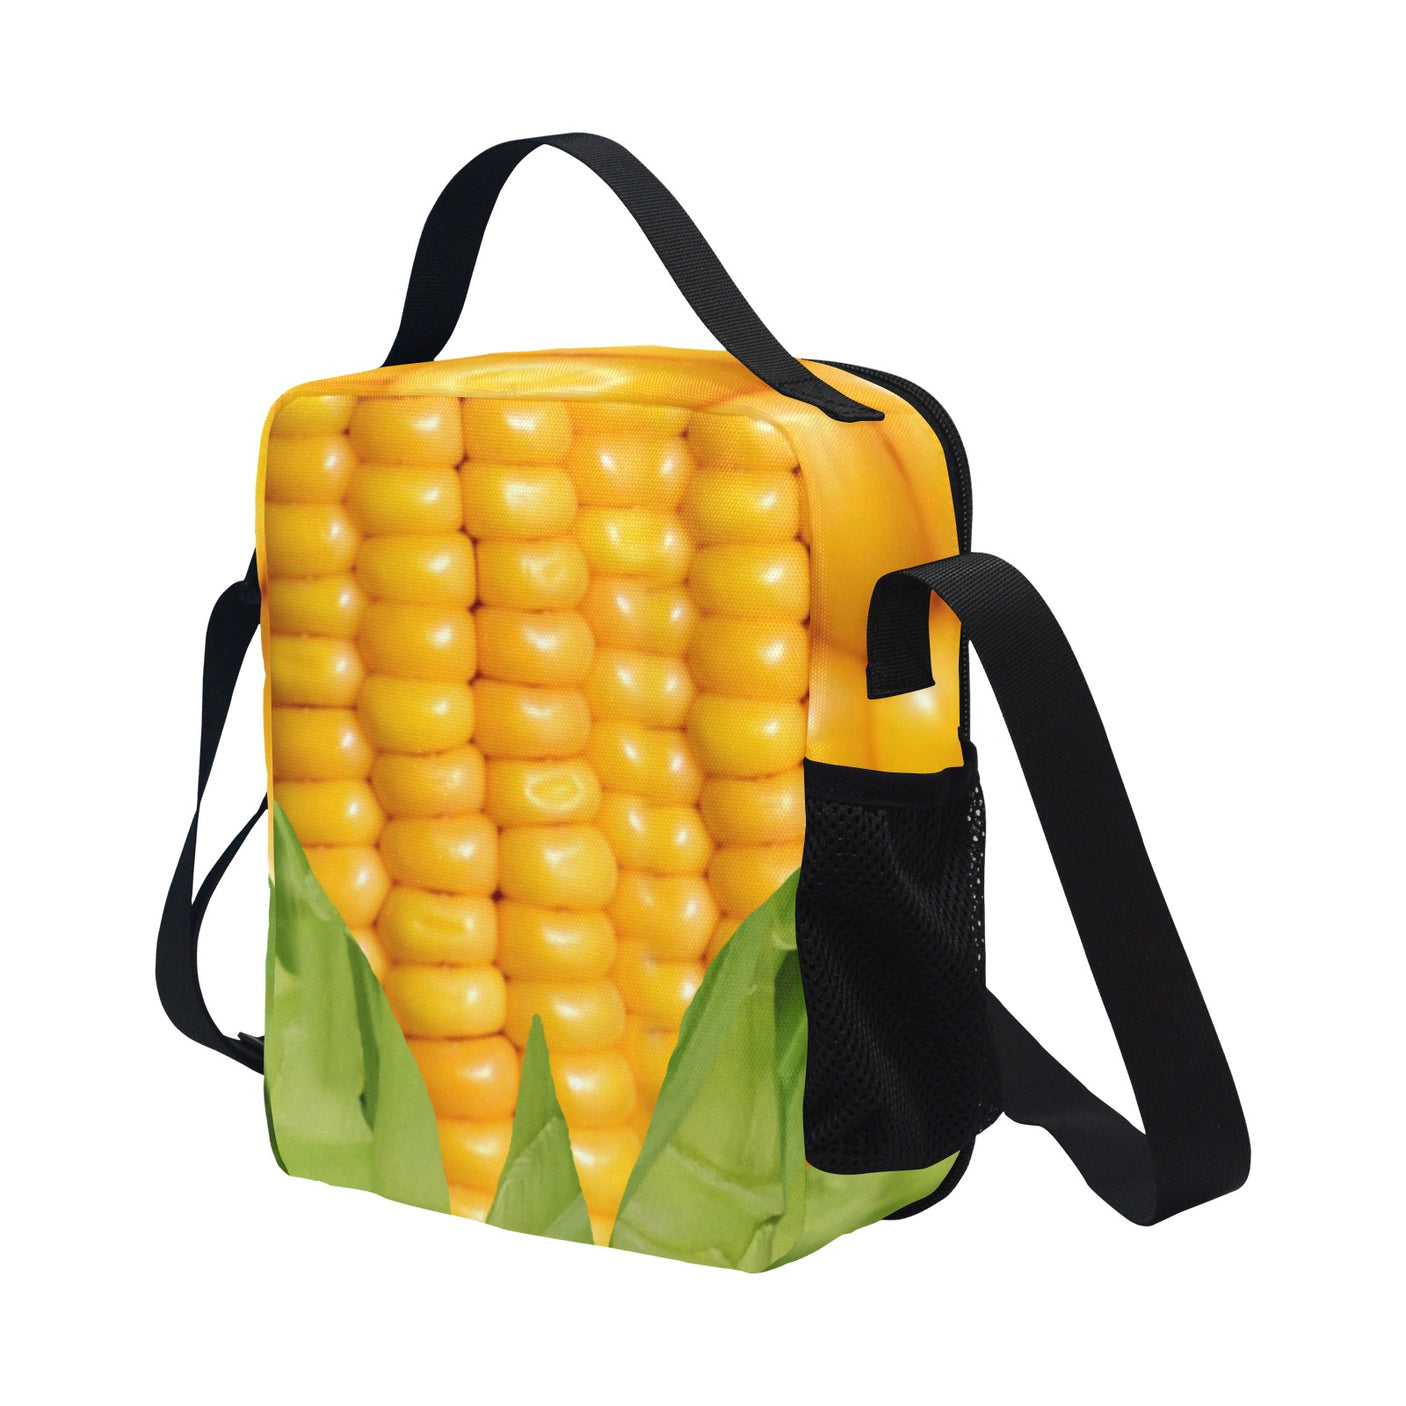 Corn Cob Lunch Box Bag